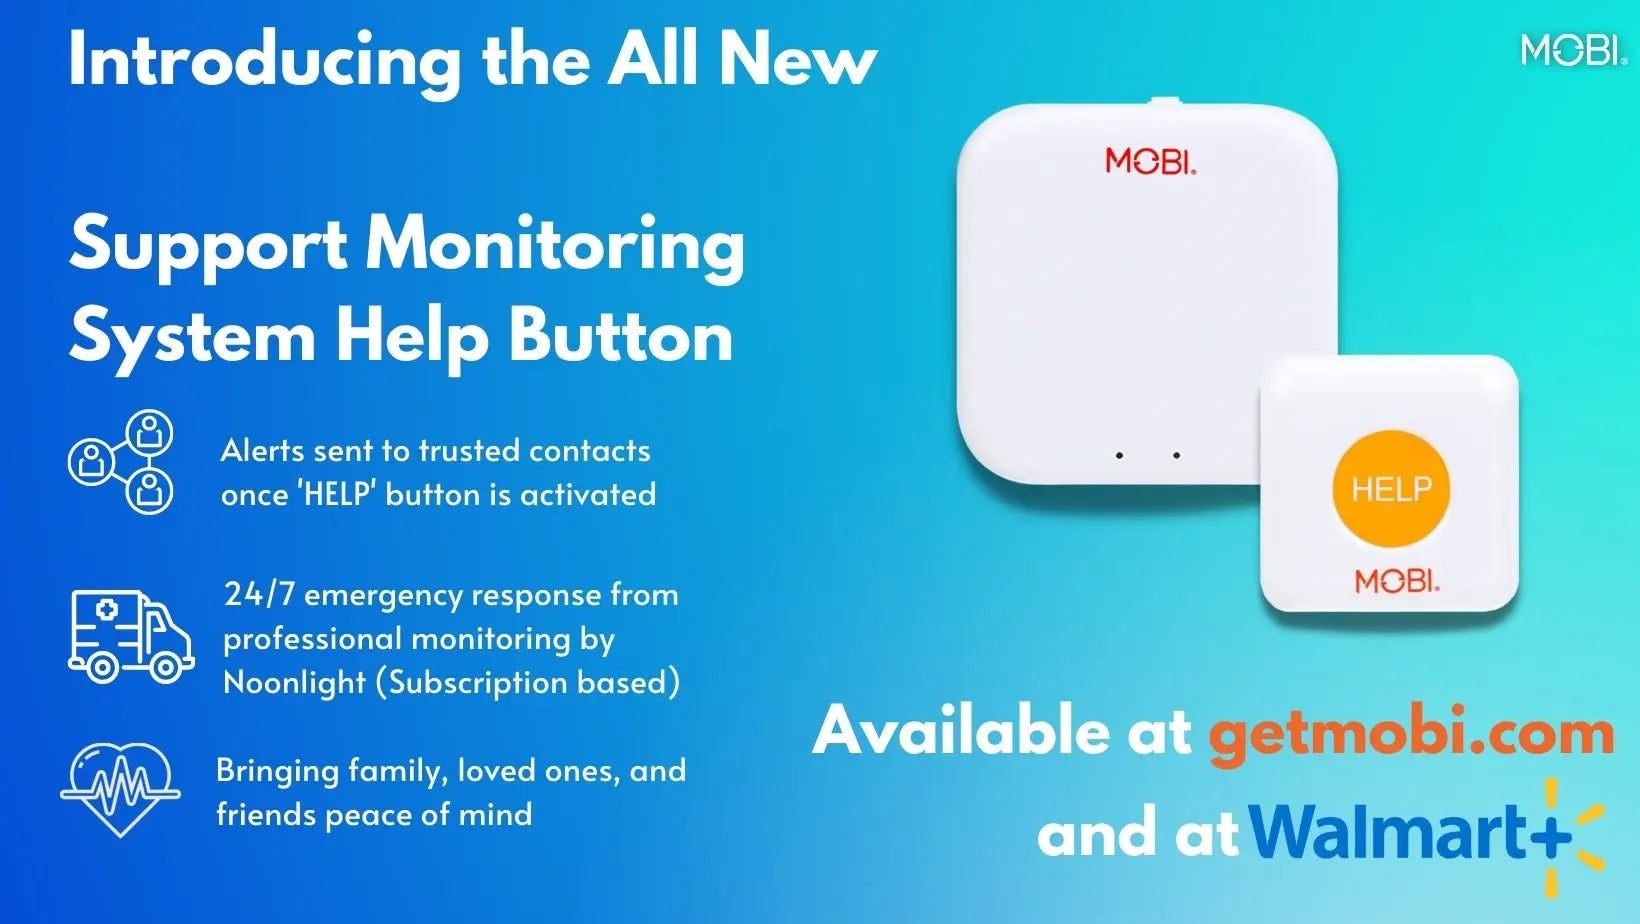 MOBI Rolls Out Affordable Smart Medical Alert Button - MOBI USA